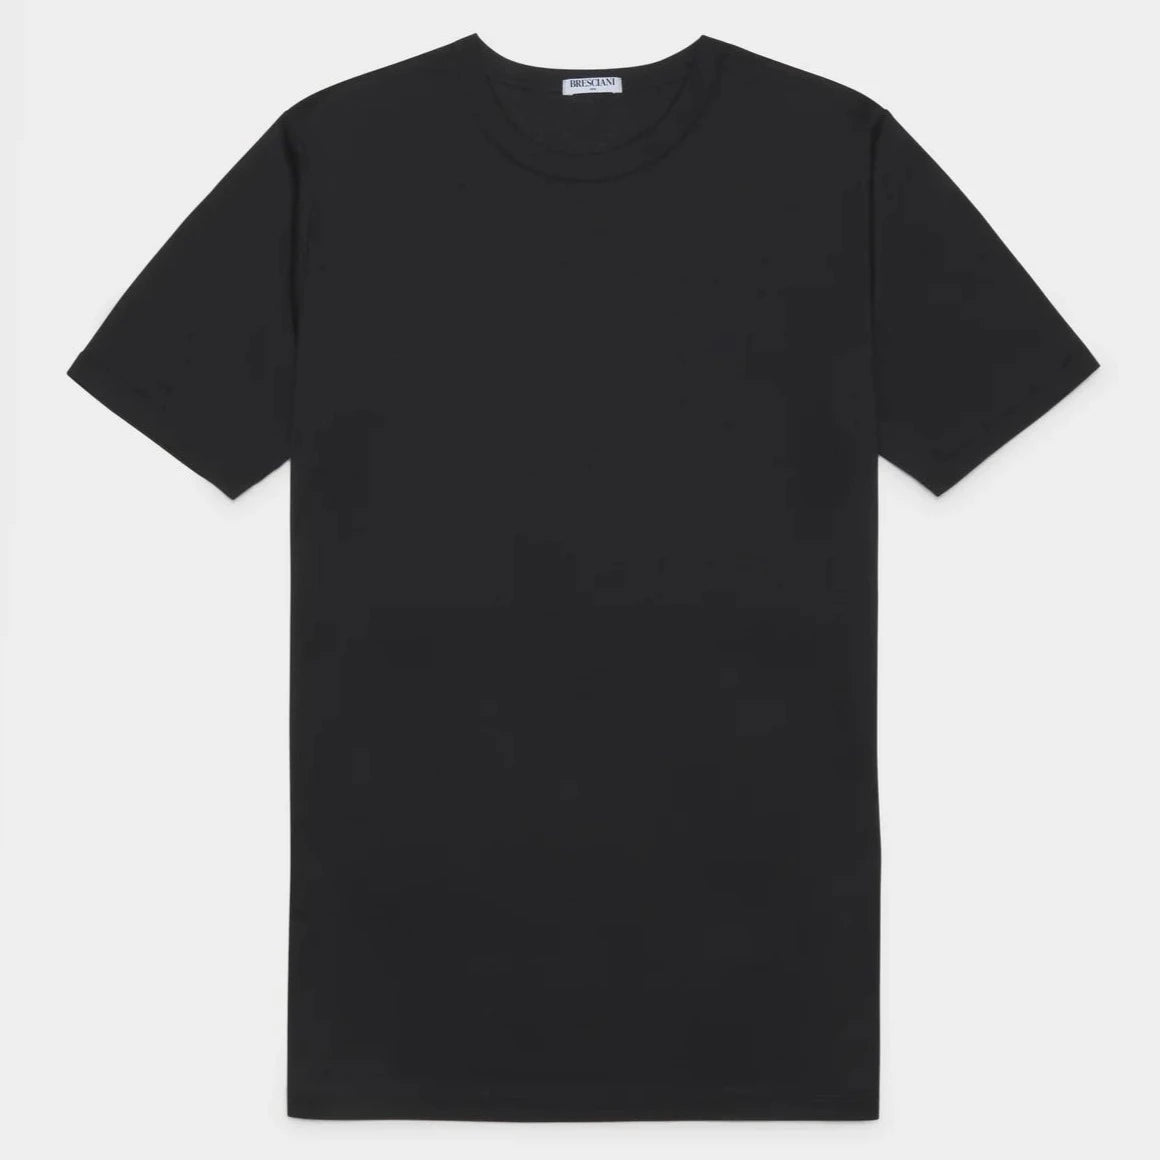 Bresciani 100% Cotton Knitted Round-Neck T-shirt Black